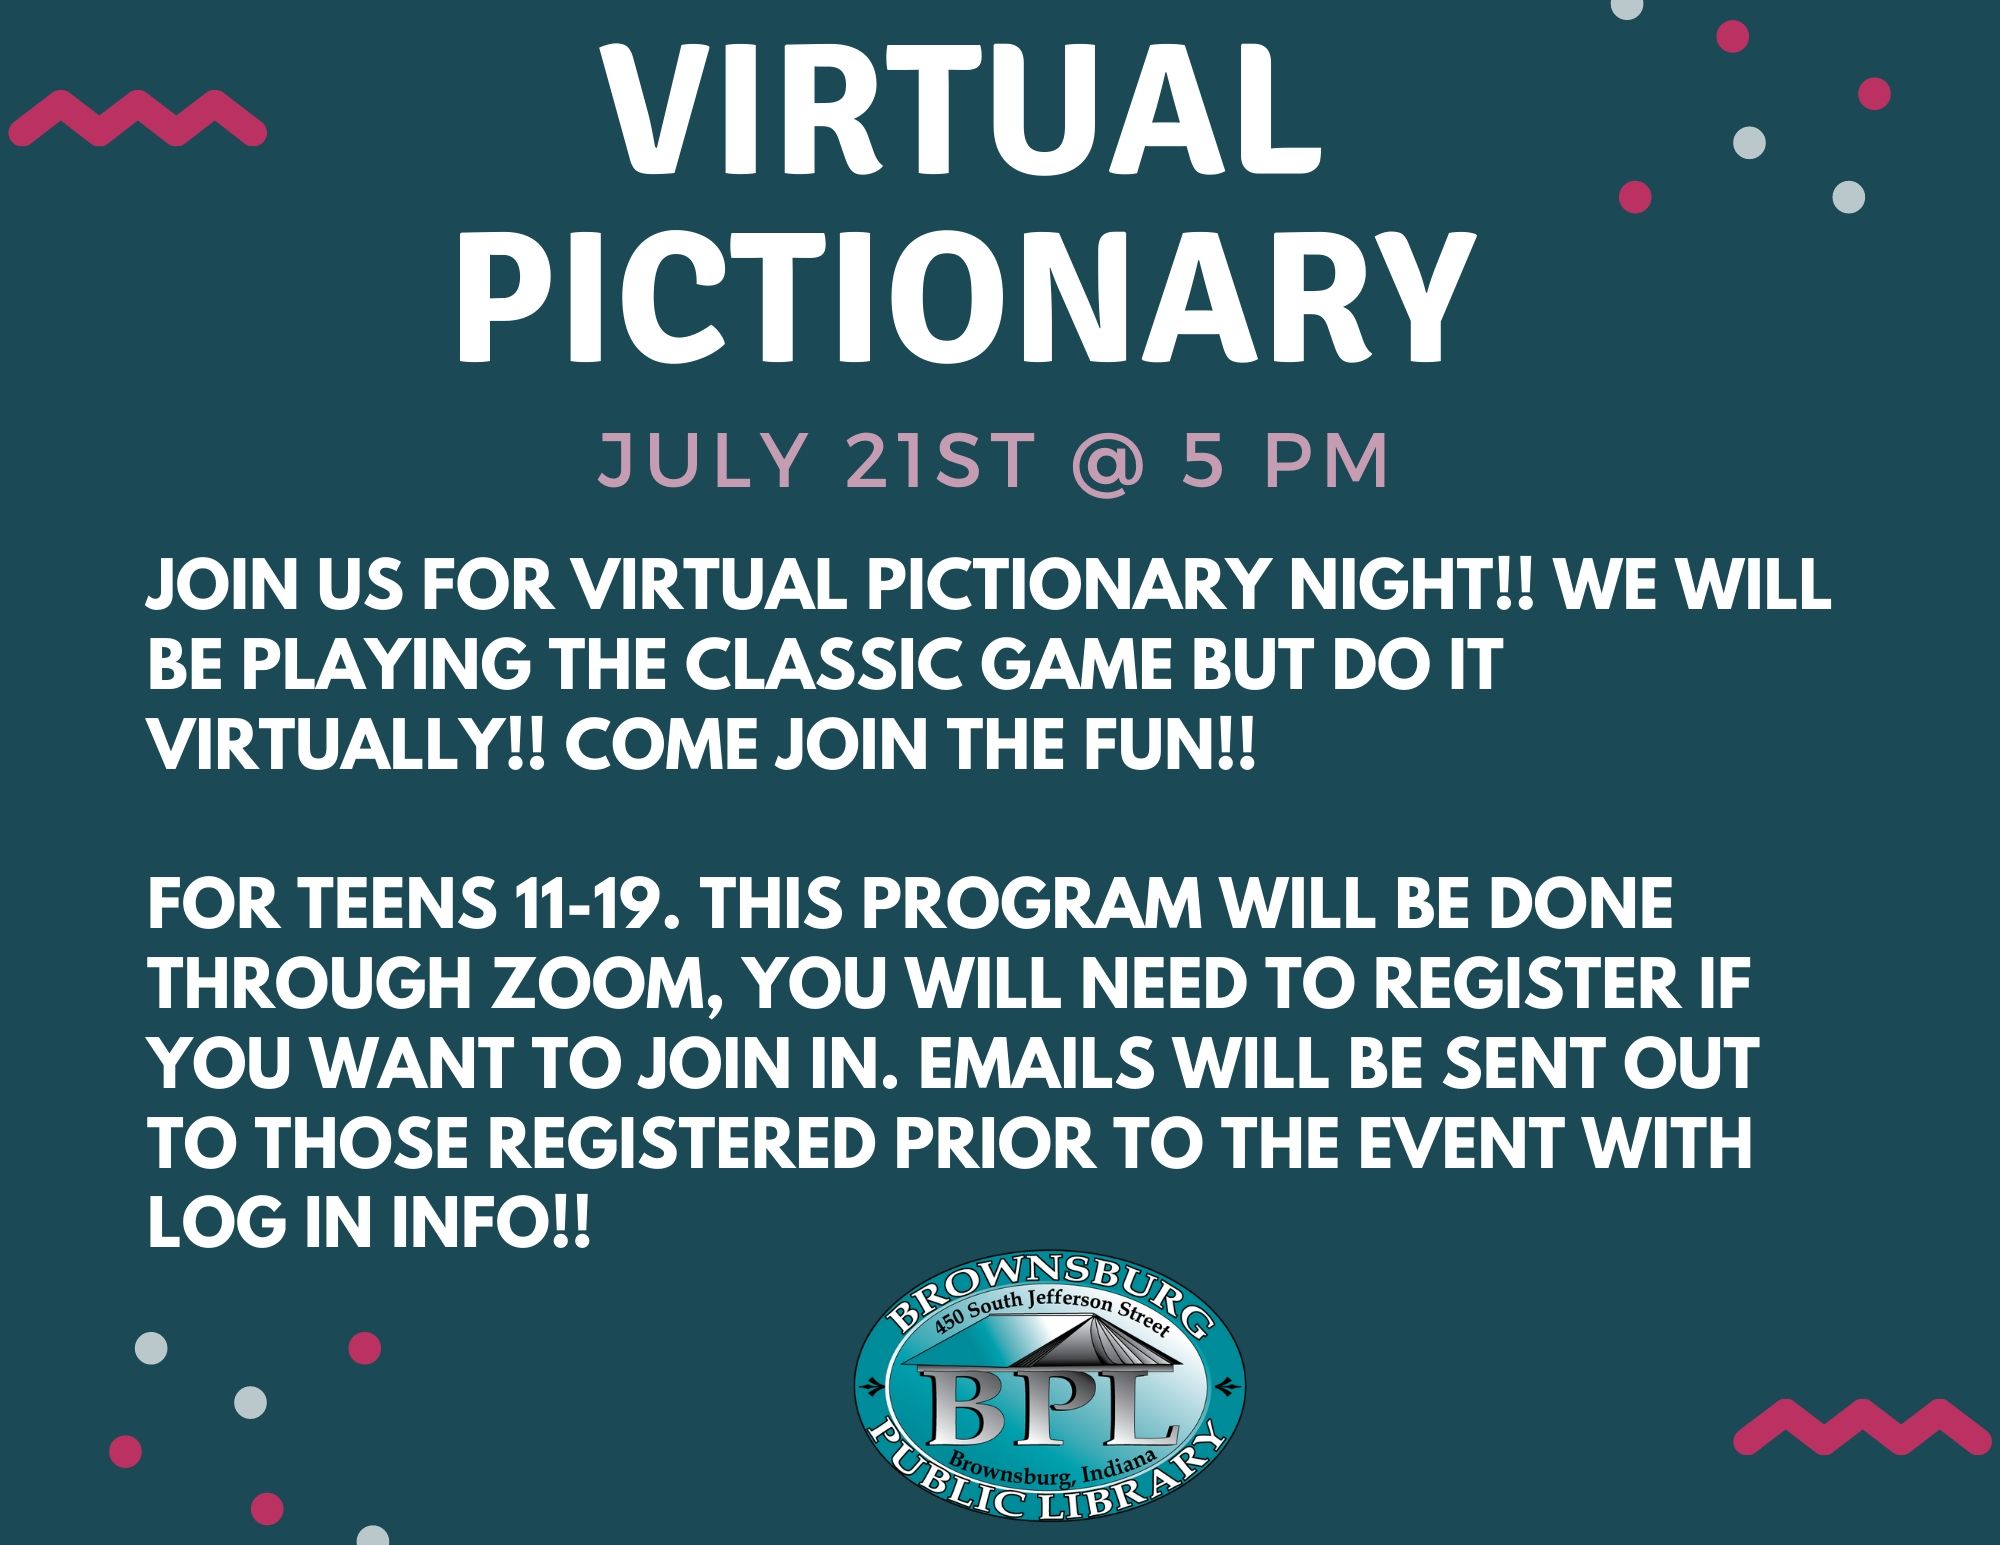 Virtual Pictionary July 21st at 5pm